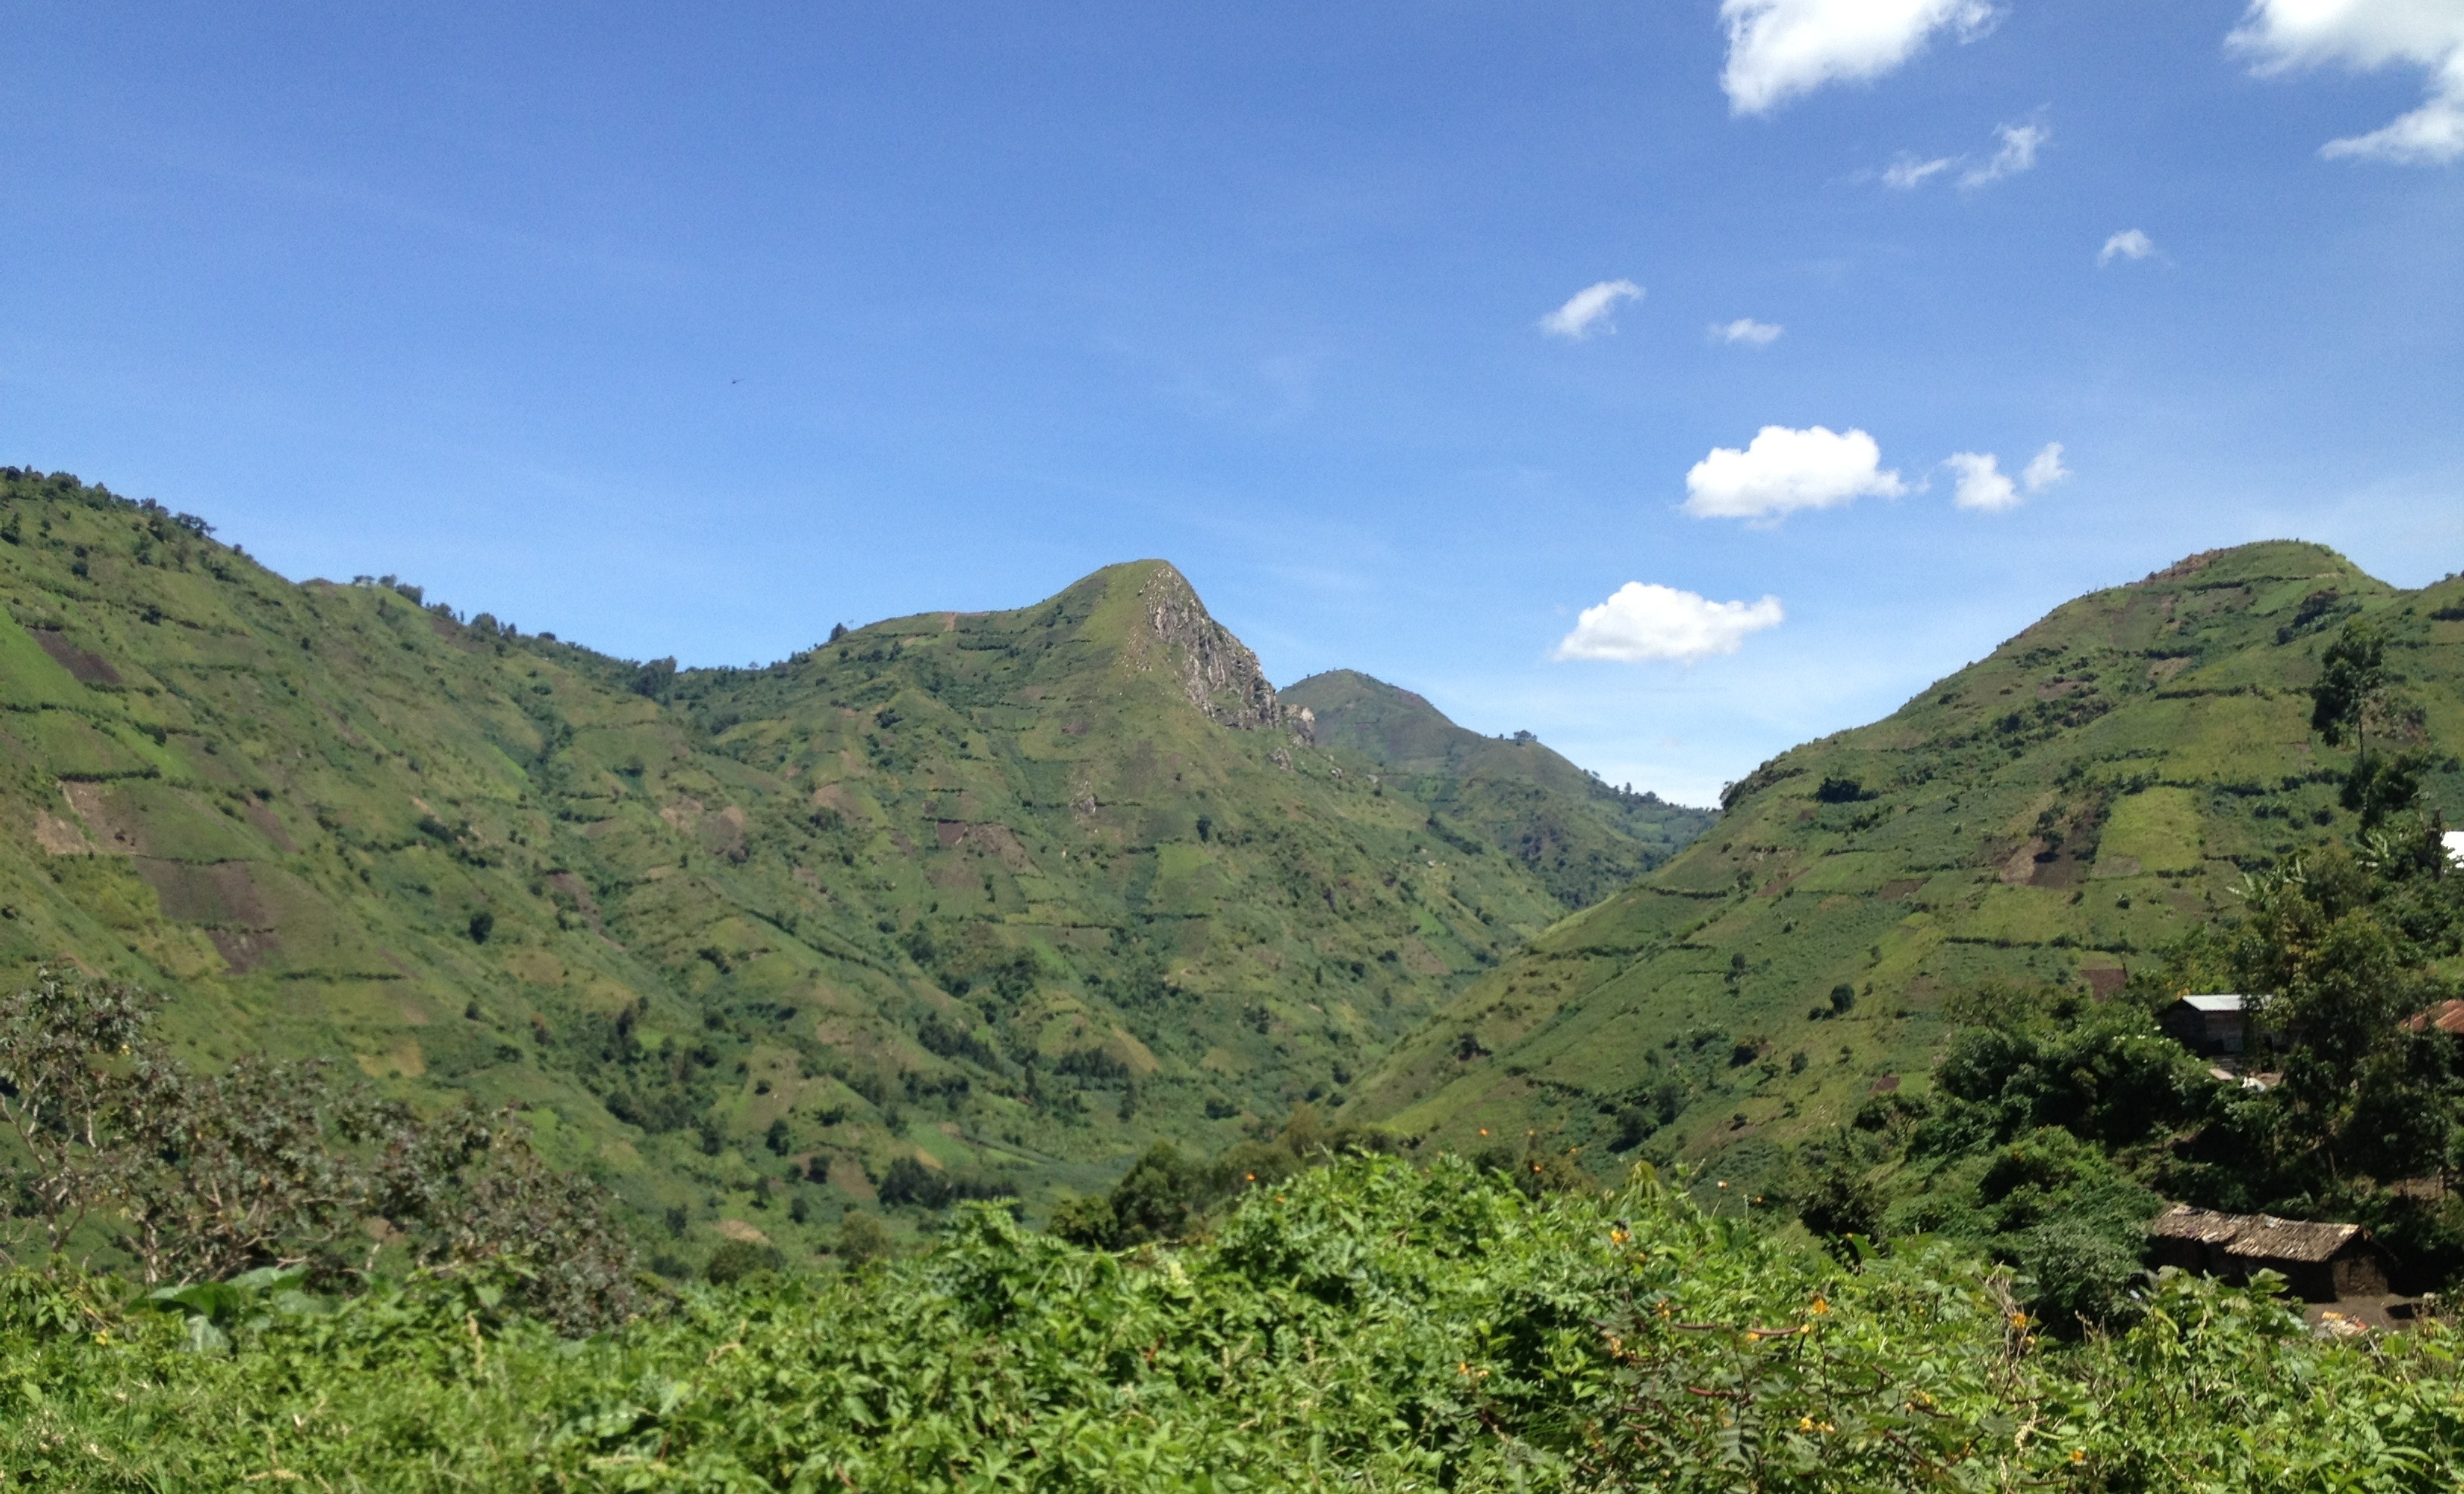 Coffee gardens on the hills on Eastern DRC-670182-edited.jpg